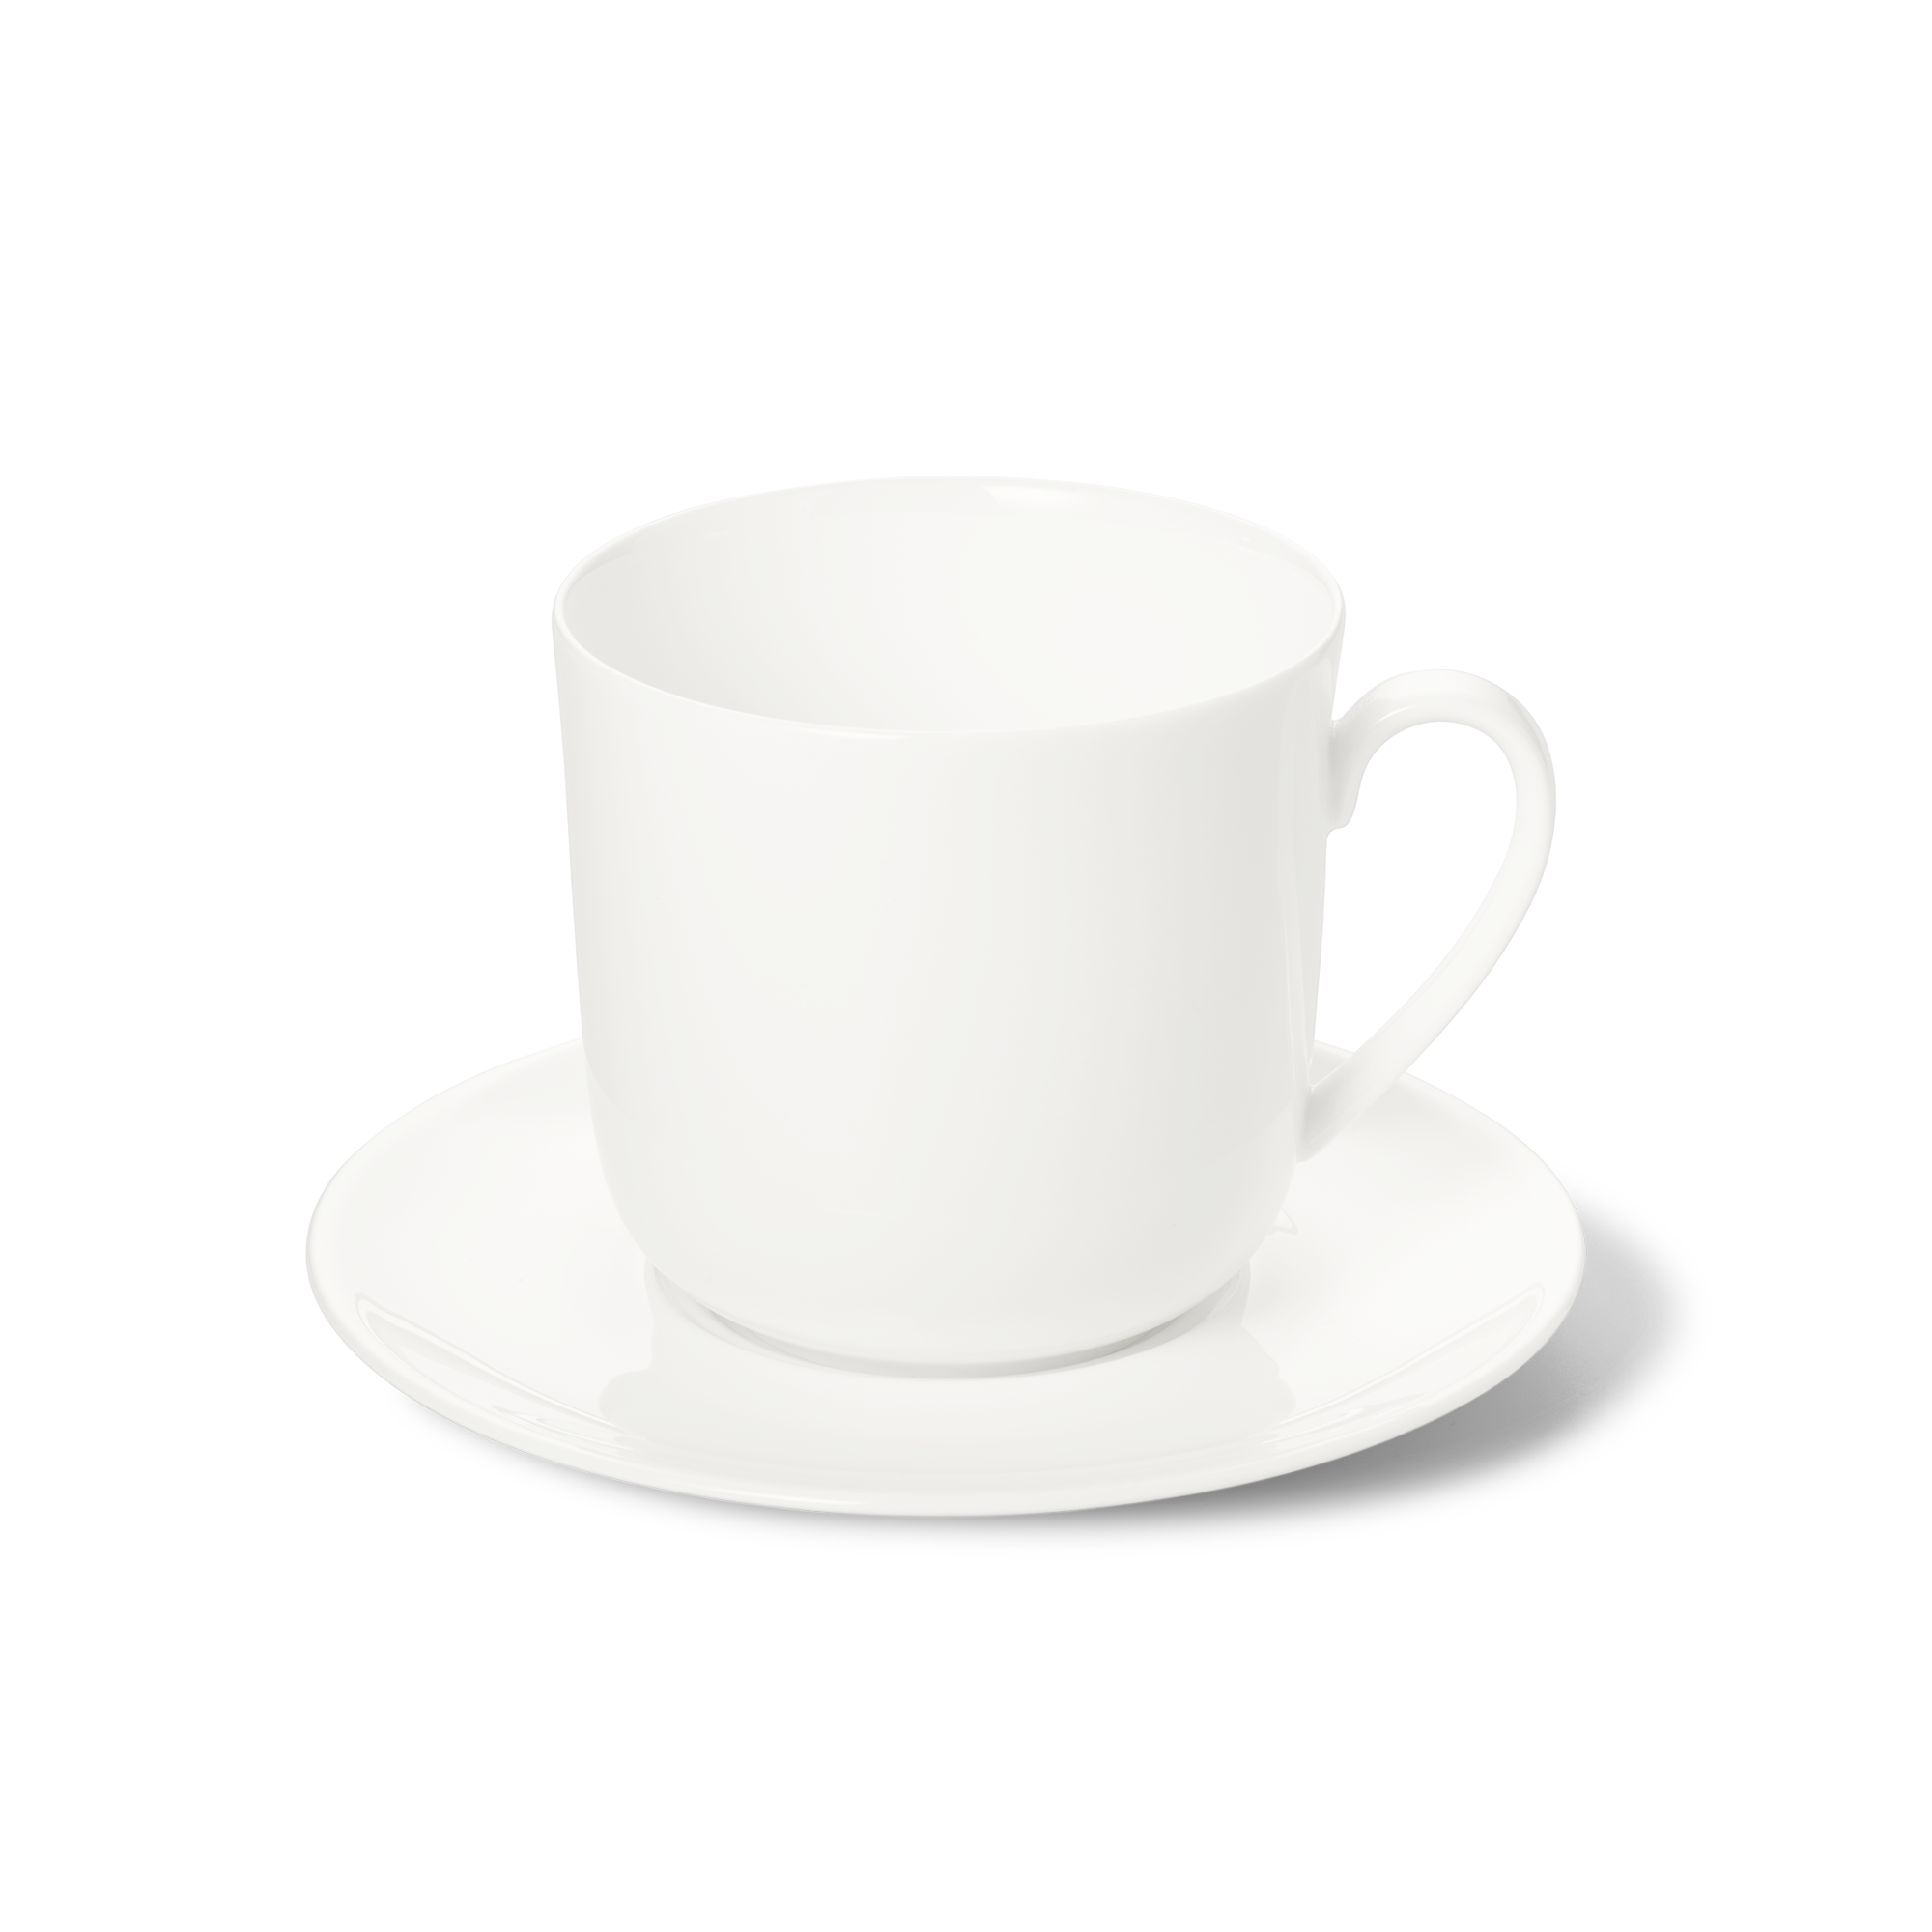 Mug 0.32 l with saucer